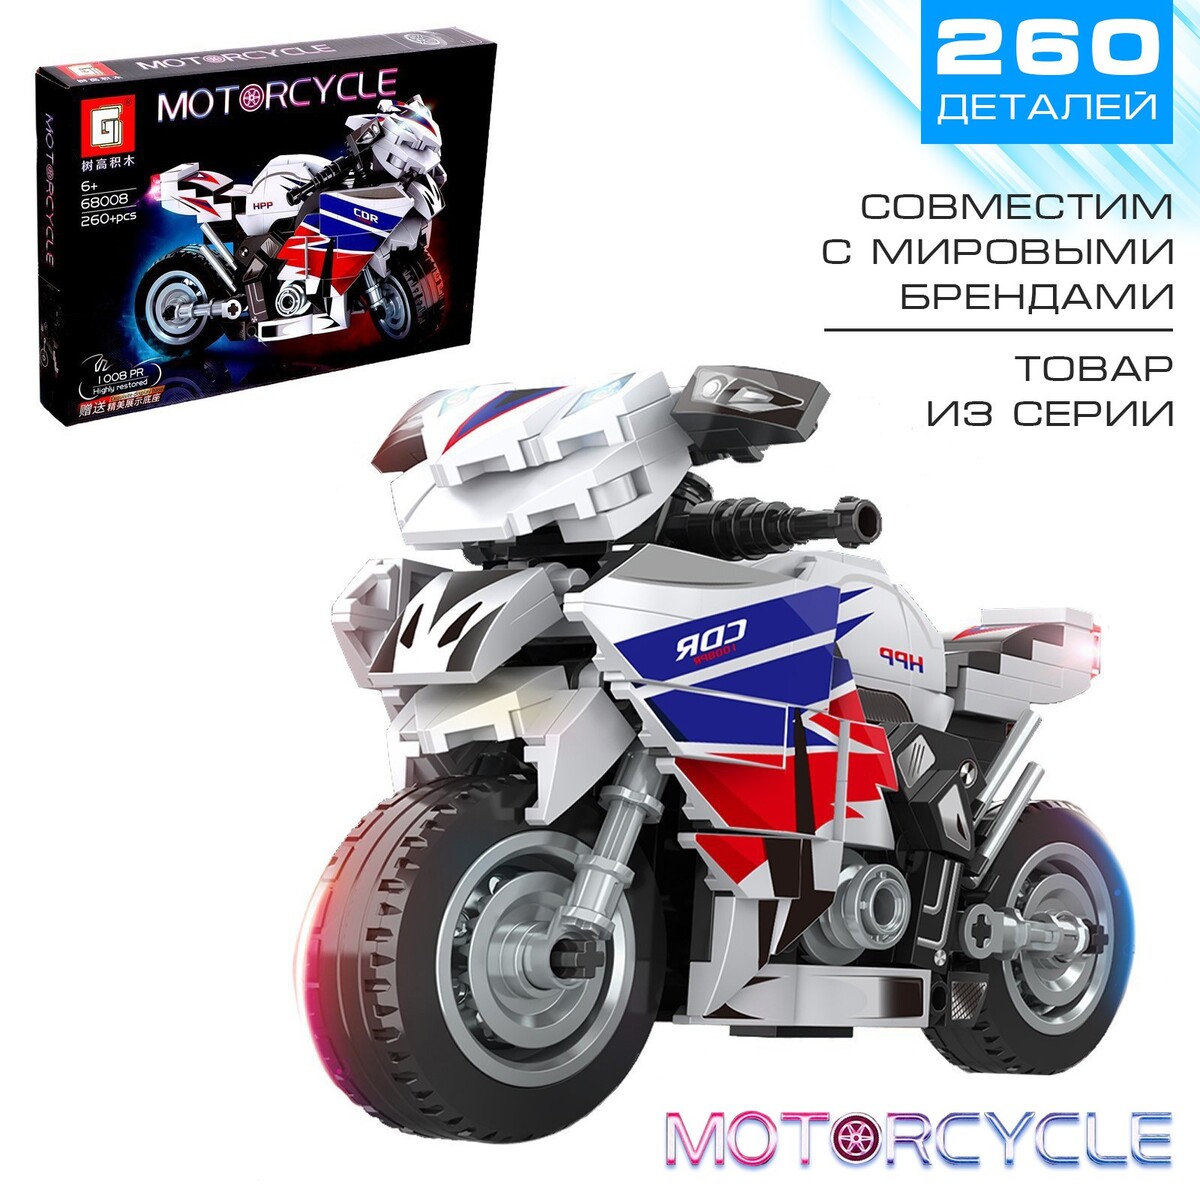 Конструктор мотоцикл motorcycle, 260 деталей 6+ конструктор veld co мотоцикл 265 деталей